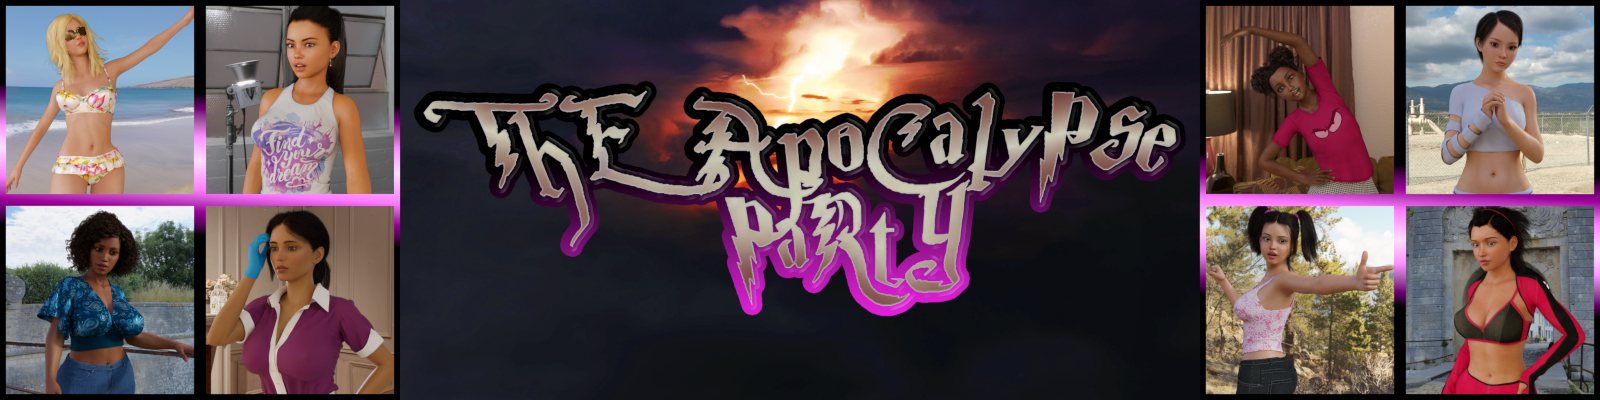 The Apocalypse Party [v0.1] main image